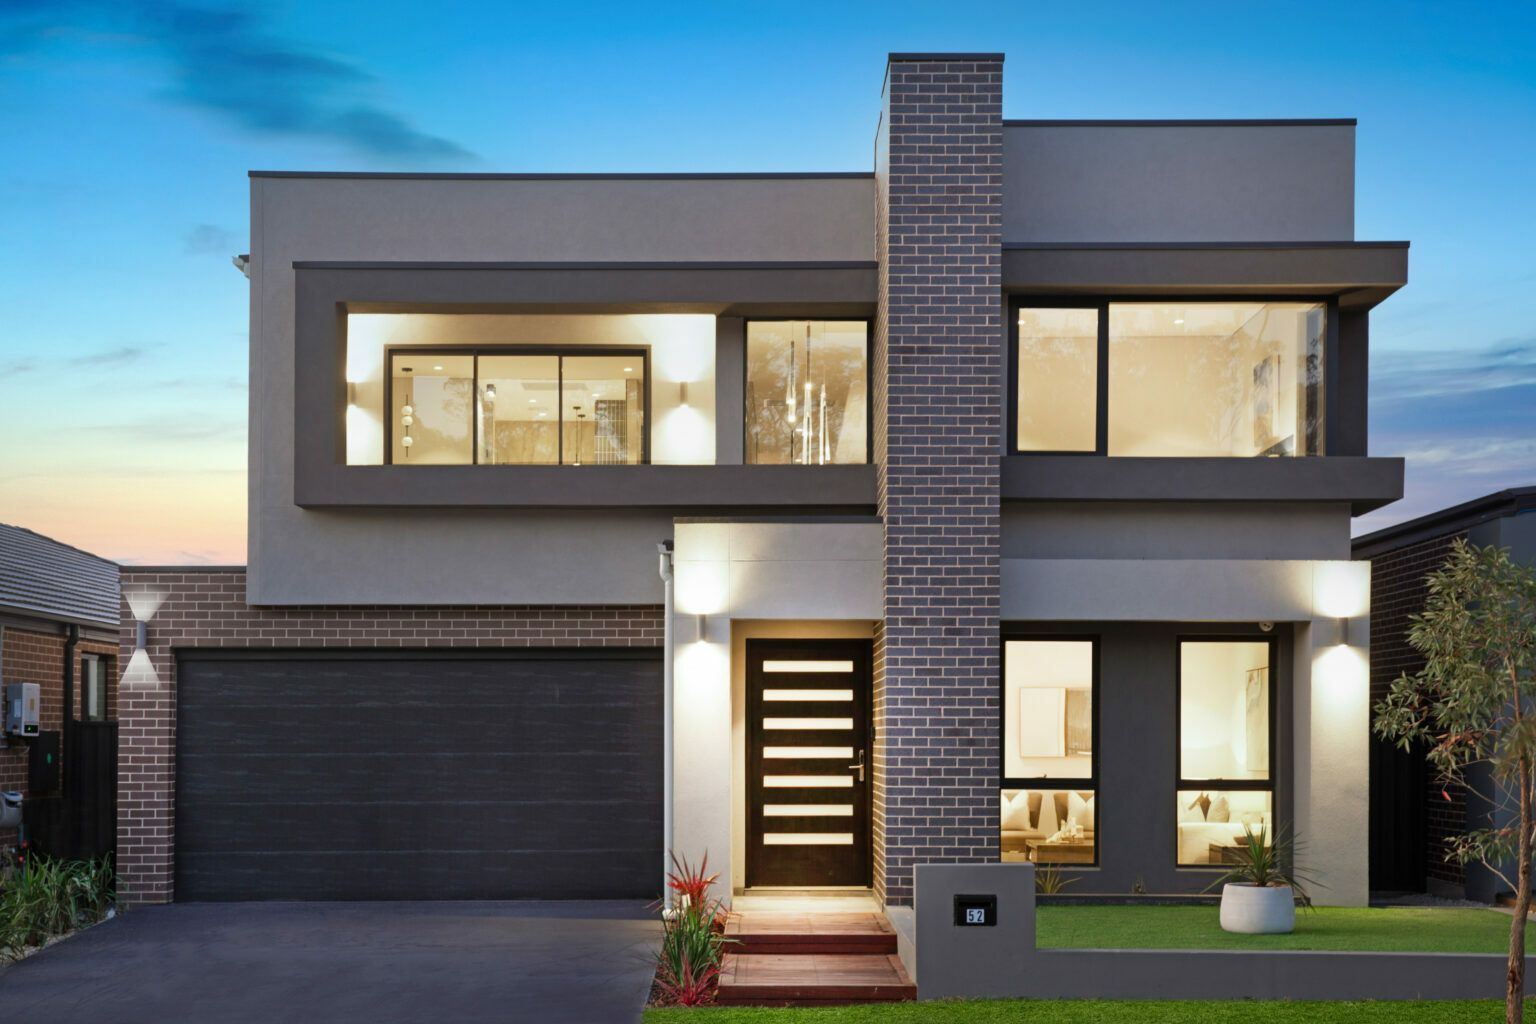 5 bedrooms New Home Designs in  OAKVILLE NSW, 2765